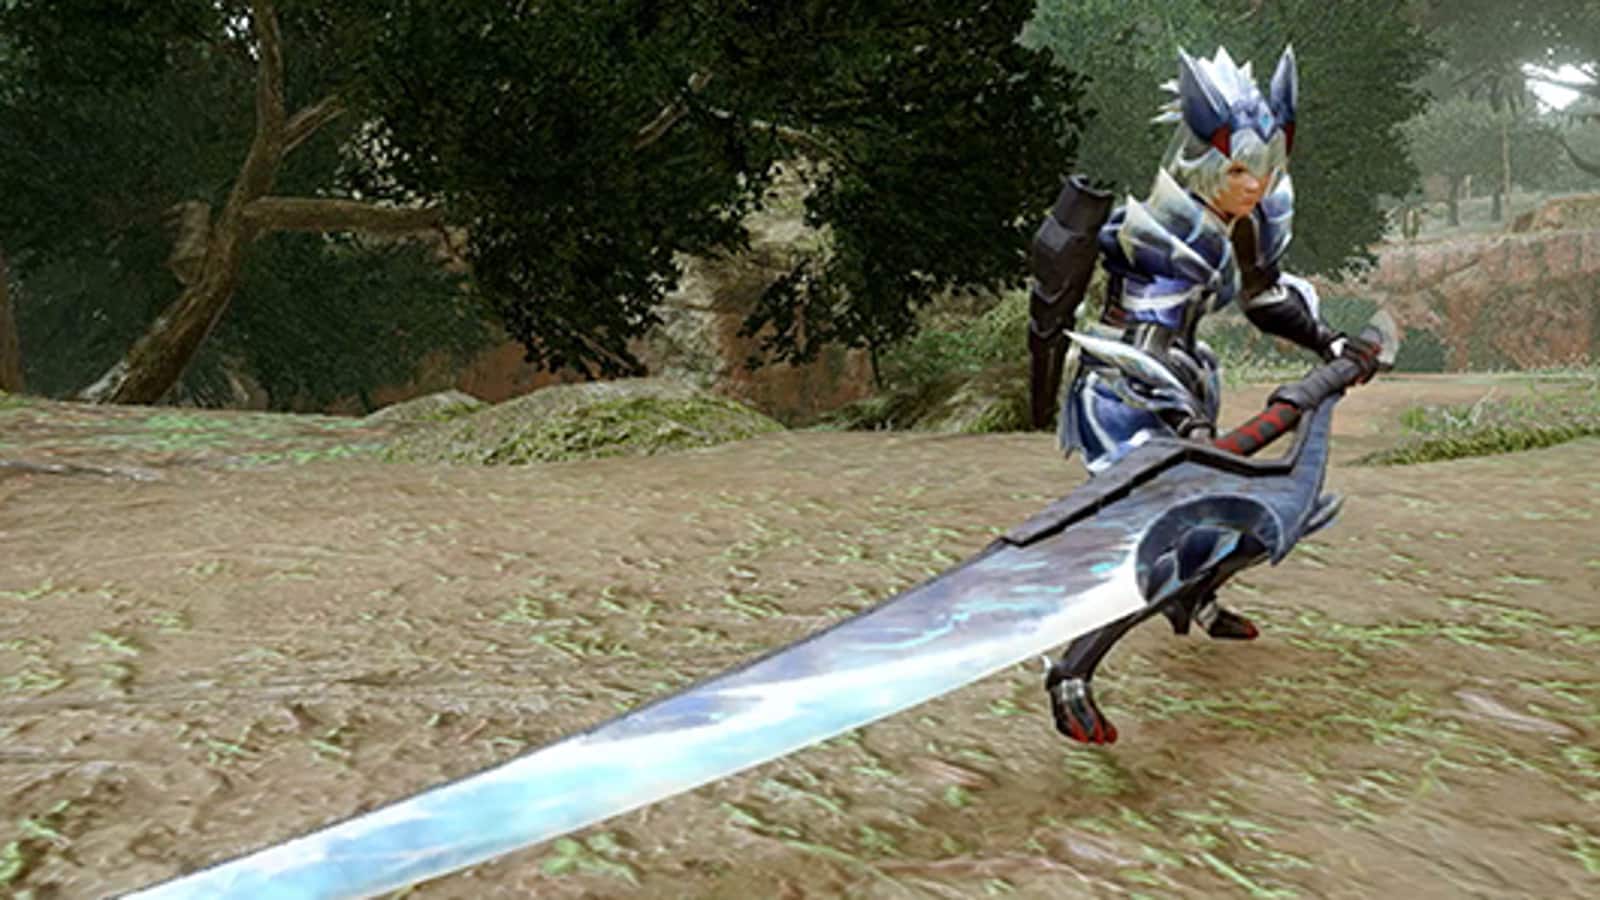 Revamped Nerfed Rengoku is the new Best Sword. (Insane) 